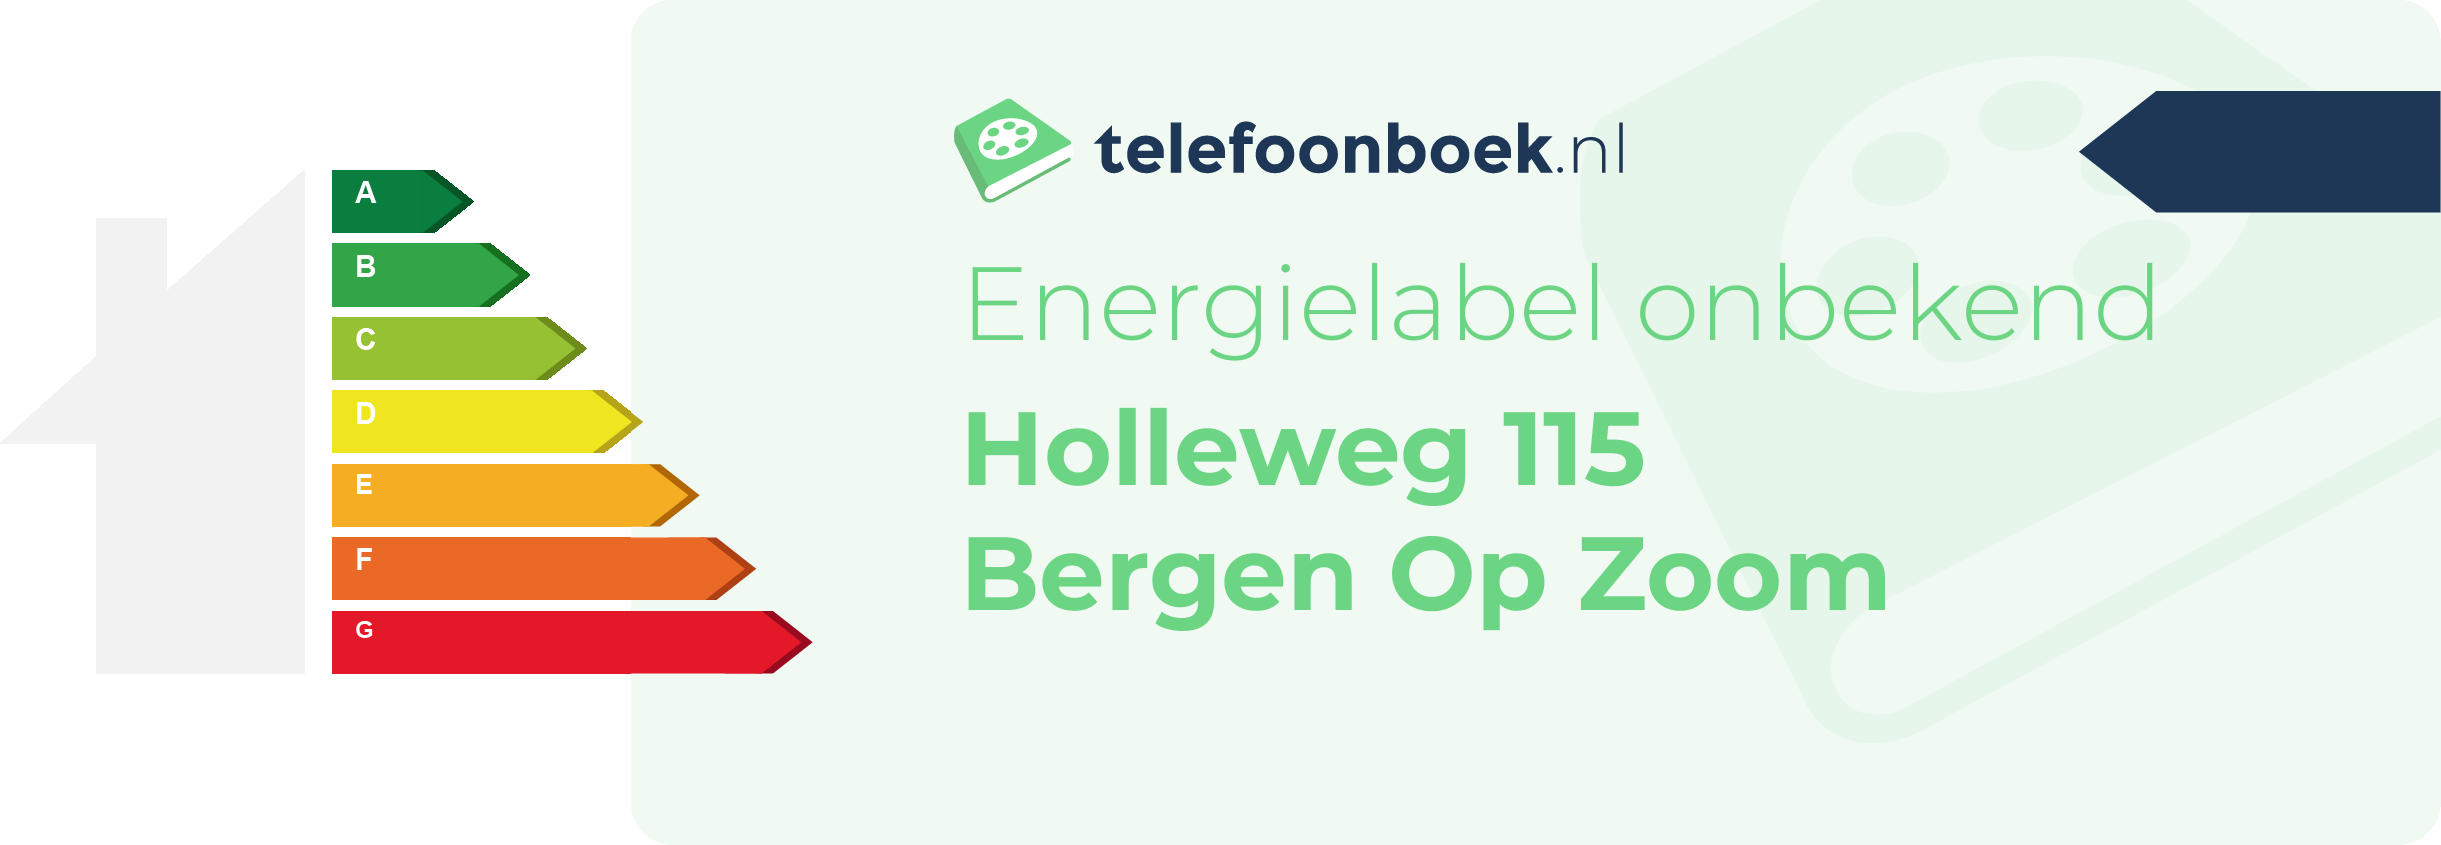 Energielabel Holleweg 115 Bergen Op Zoom